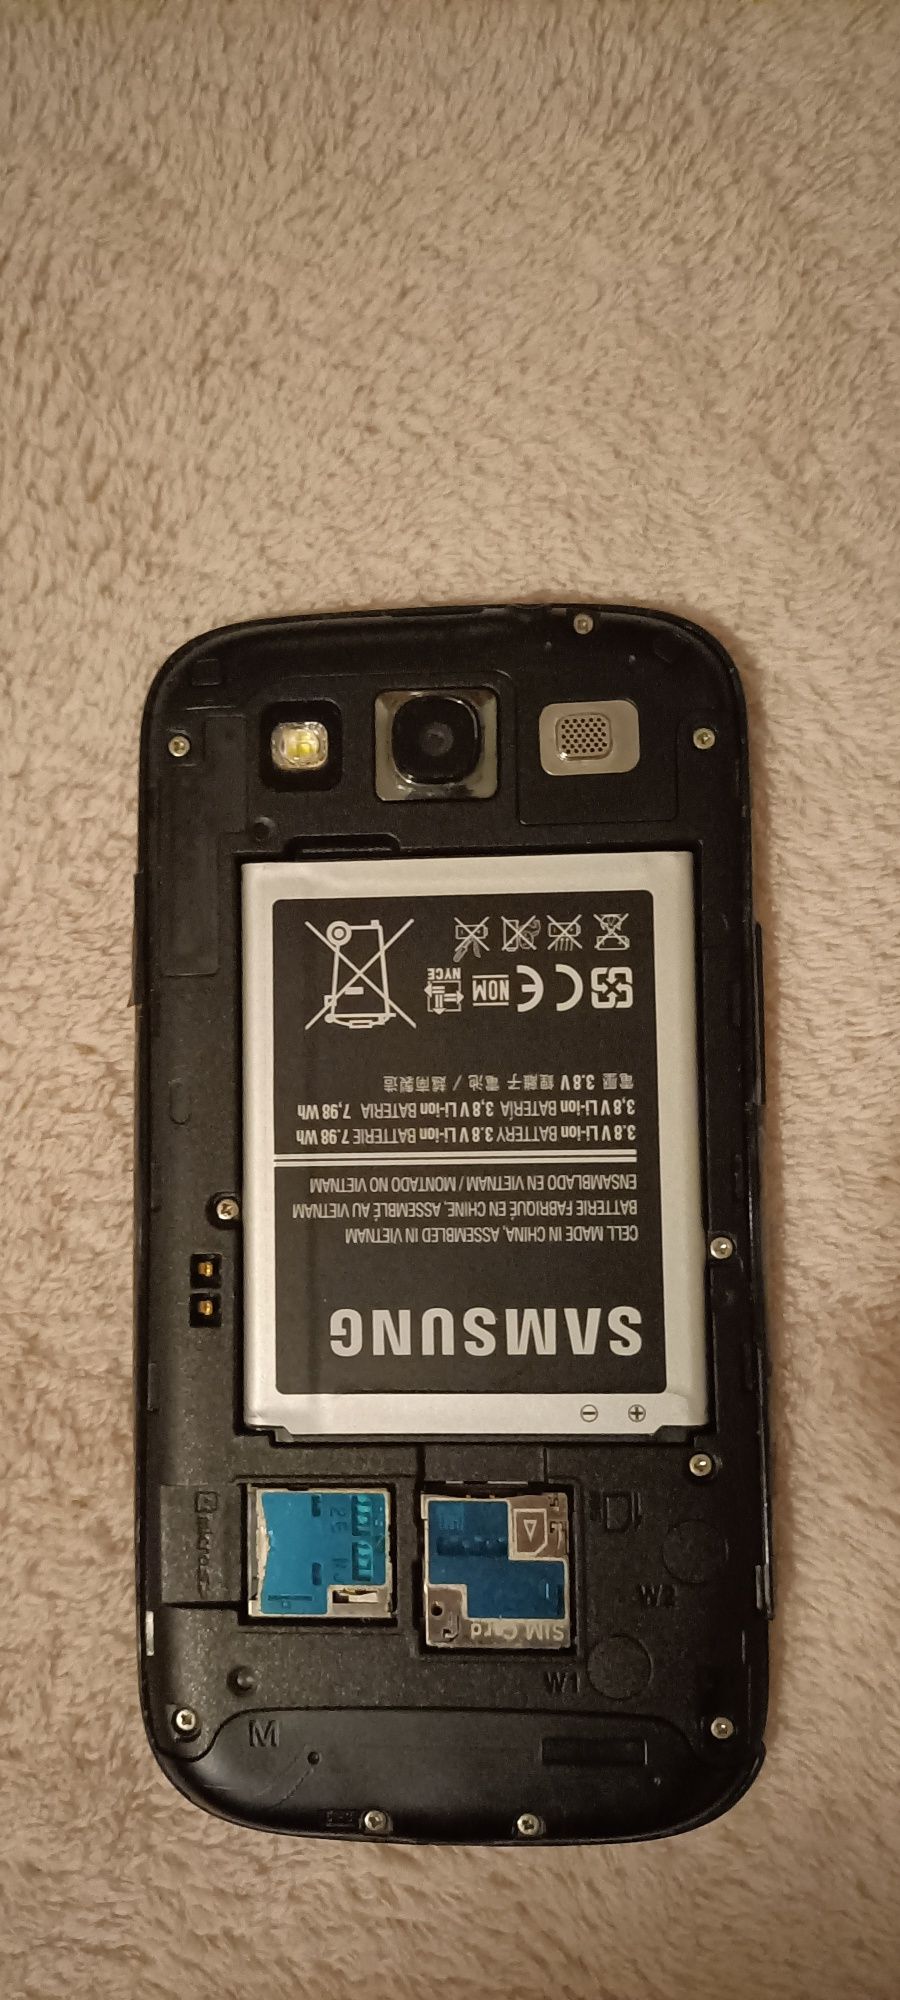 Samsung Galaxy S3 GT-i9300 Desbloqueado